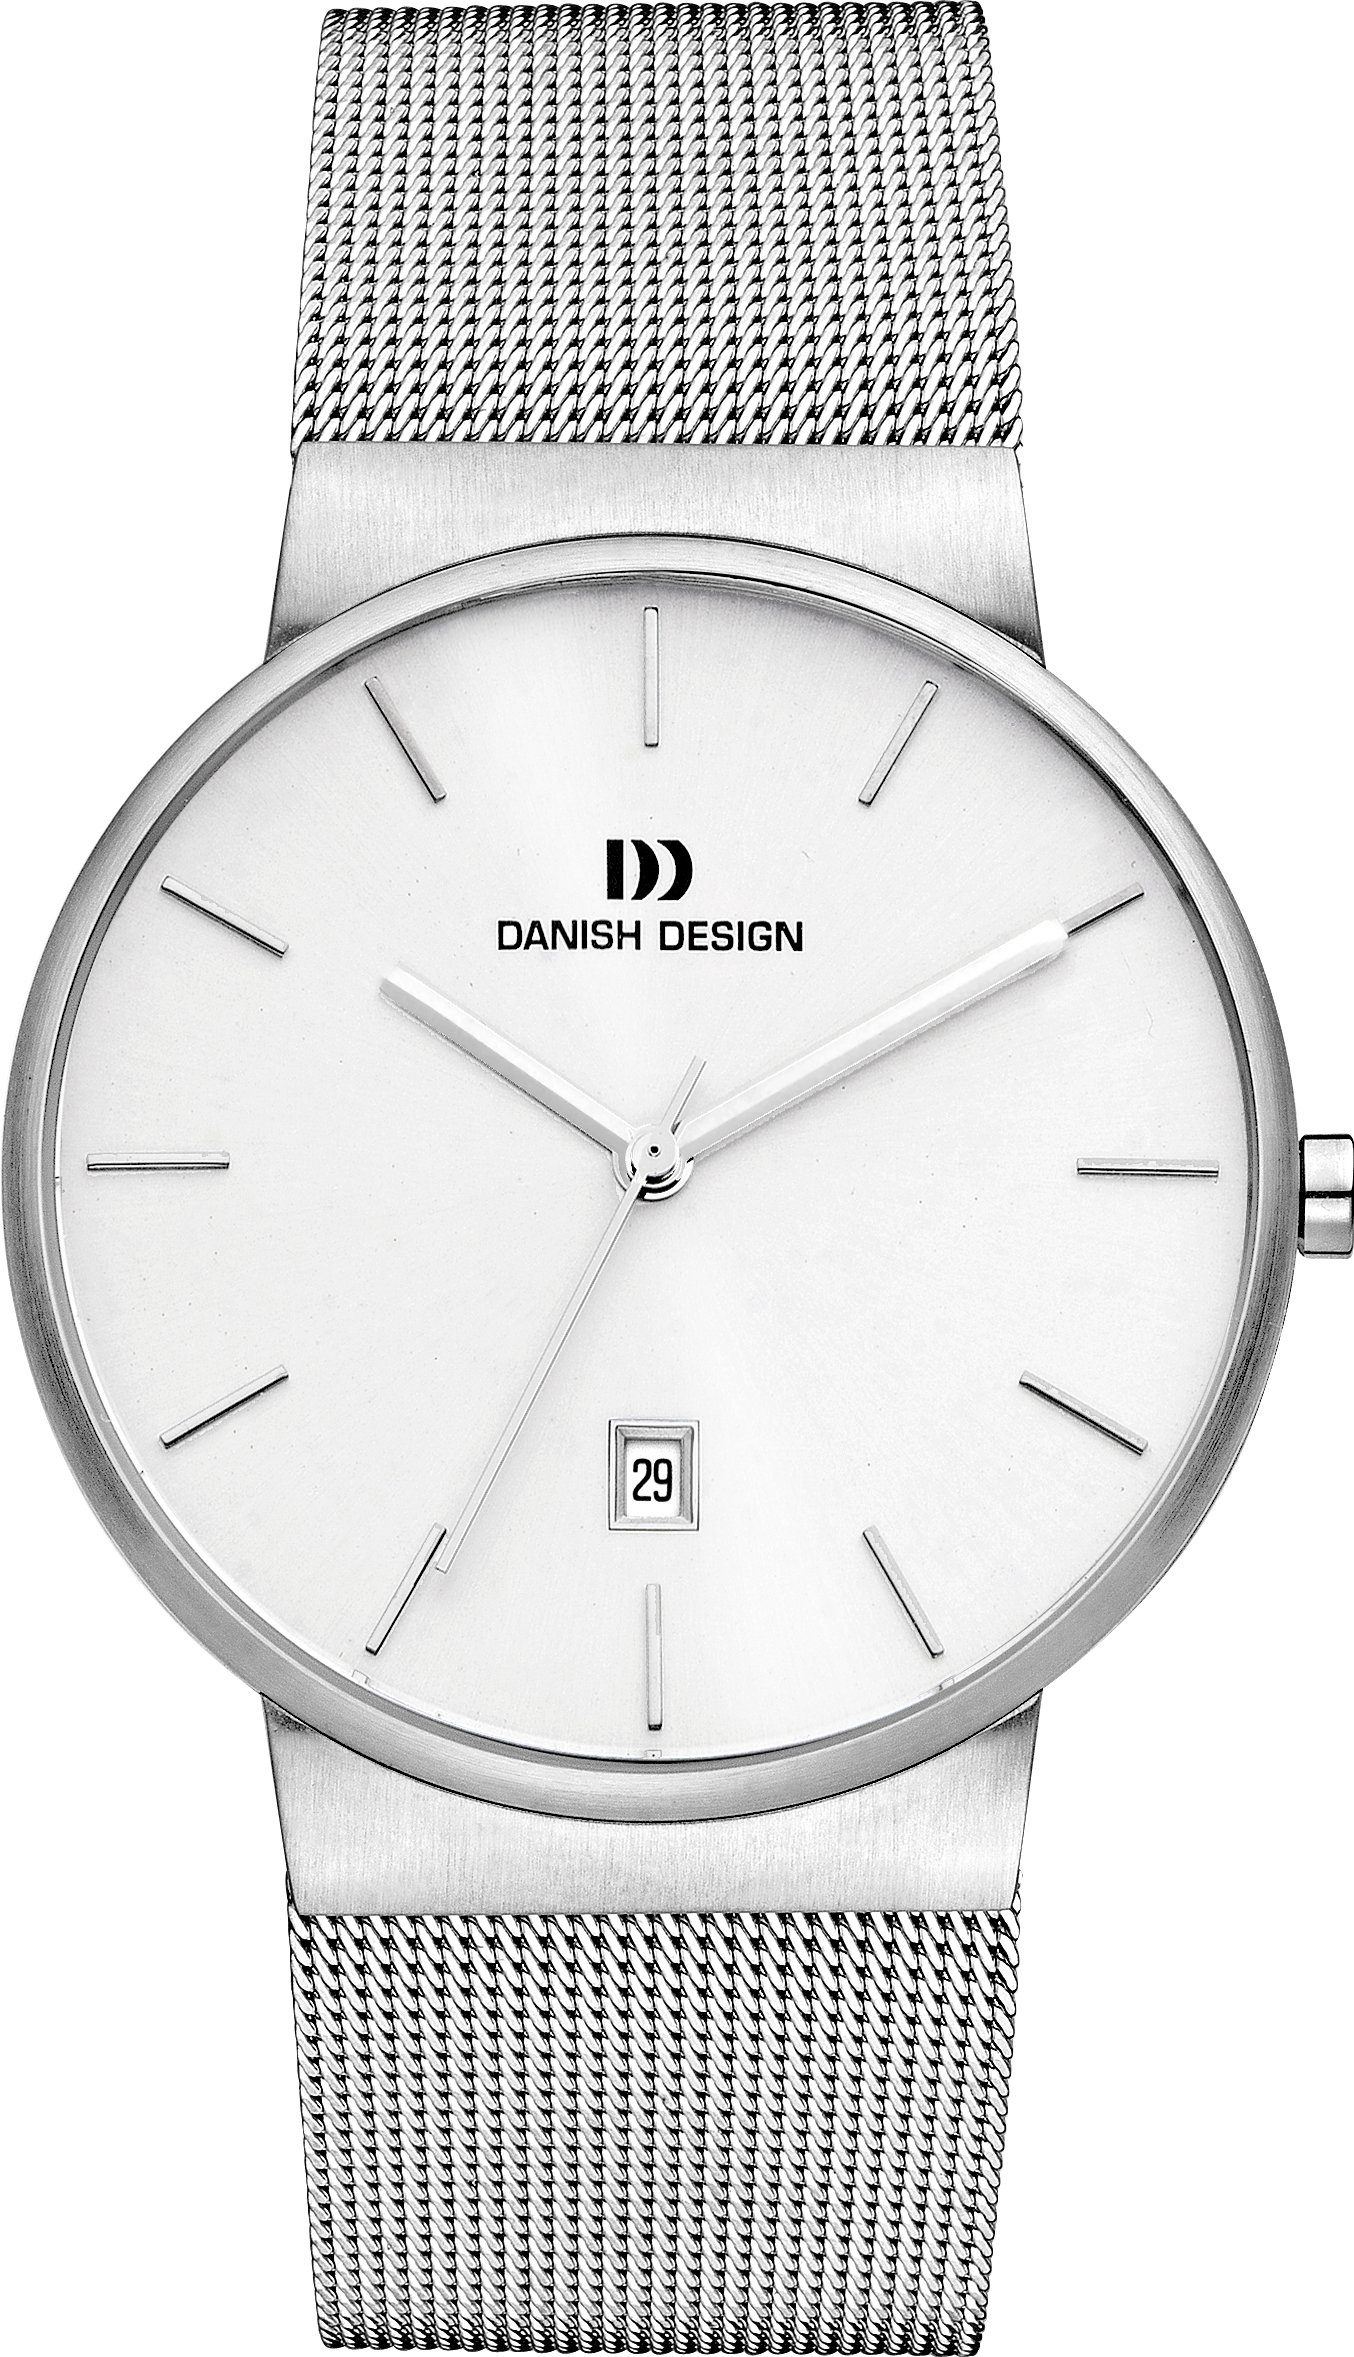 Silber Designuhr Danish 6 bei mit Datum TAGE Uhr 40mm, Design Quarzuhr Herren Datum